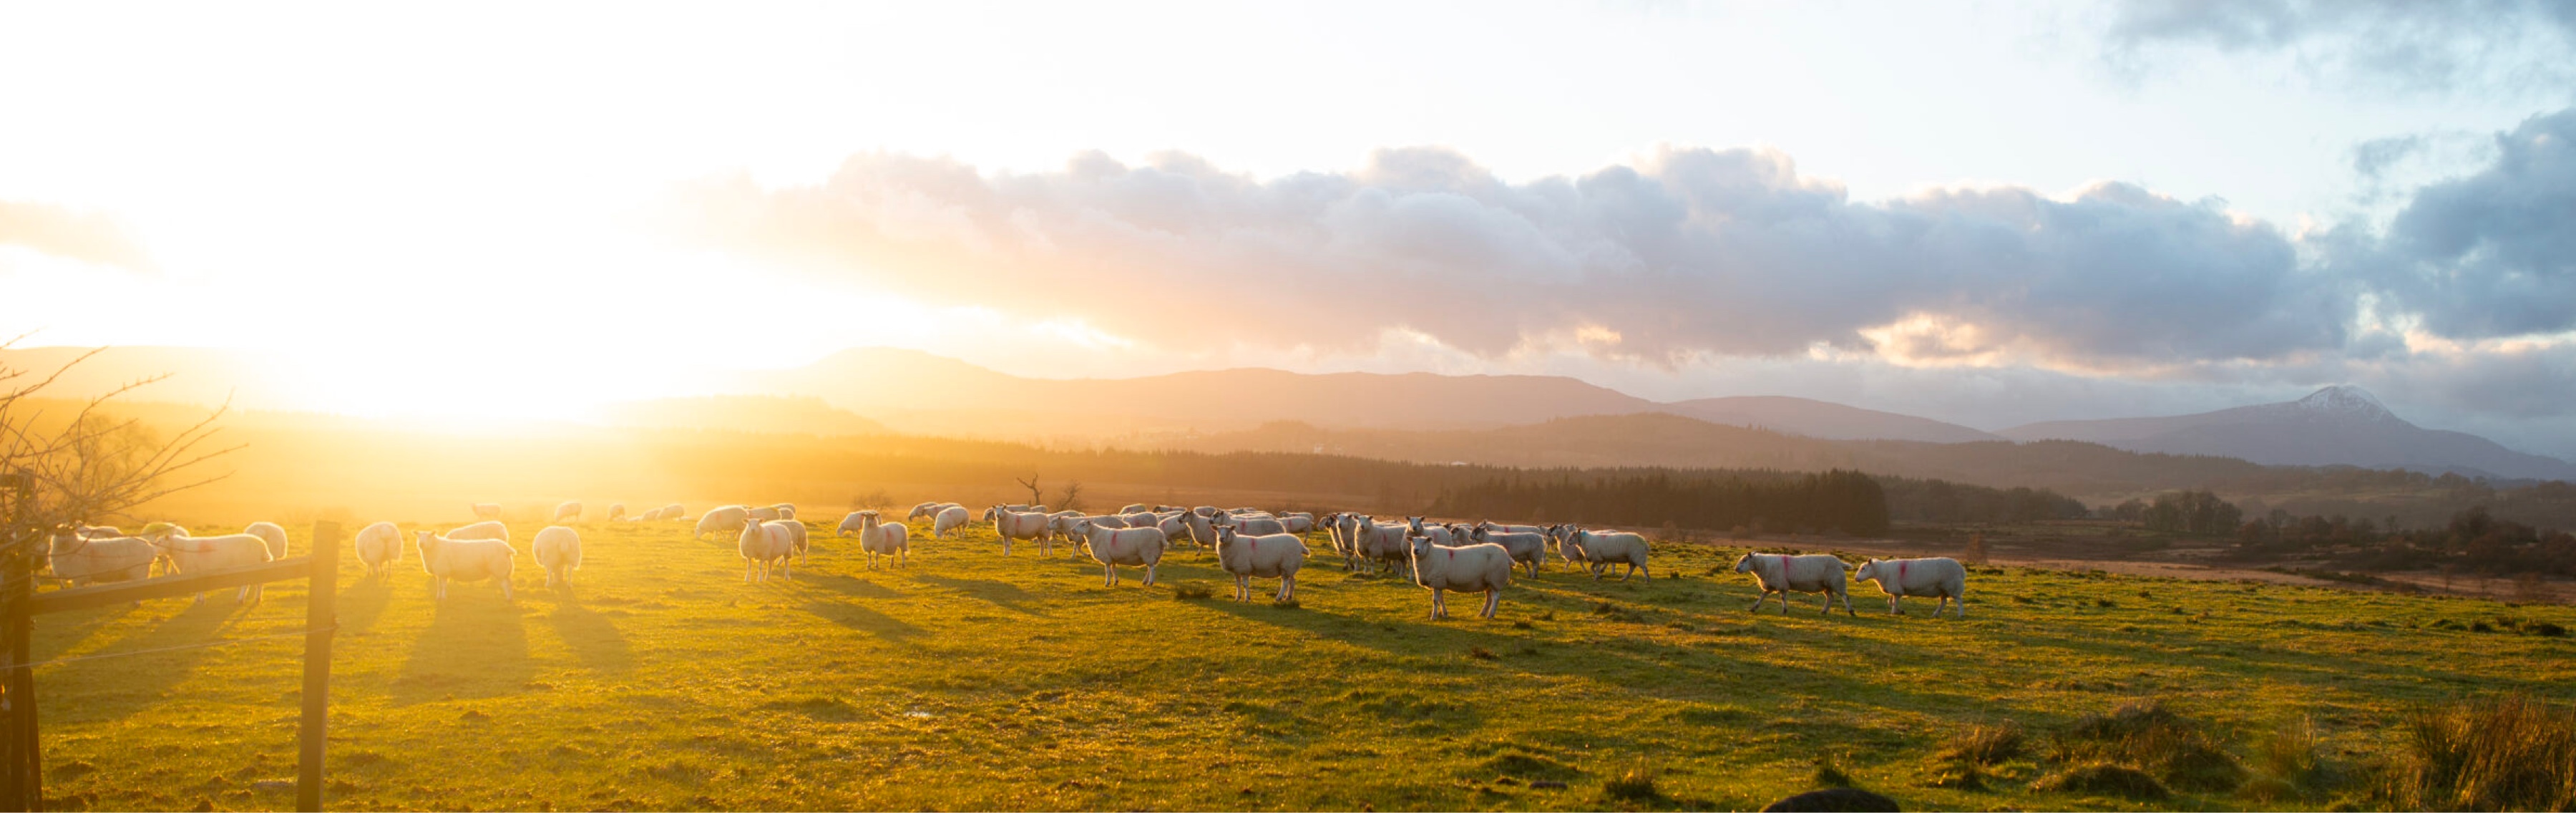 Sheep in field at sunrise, Cardross Estate